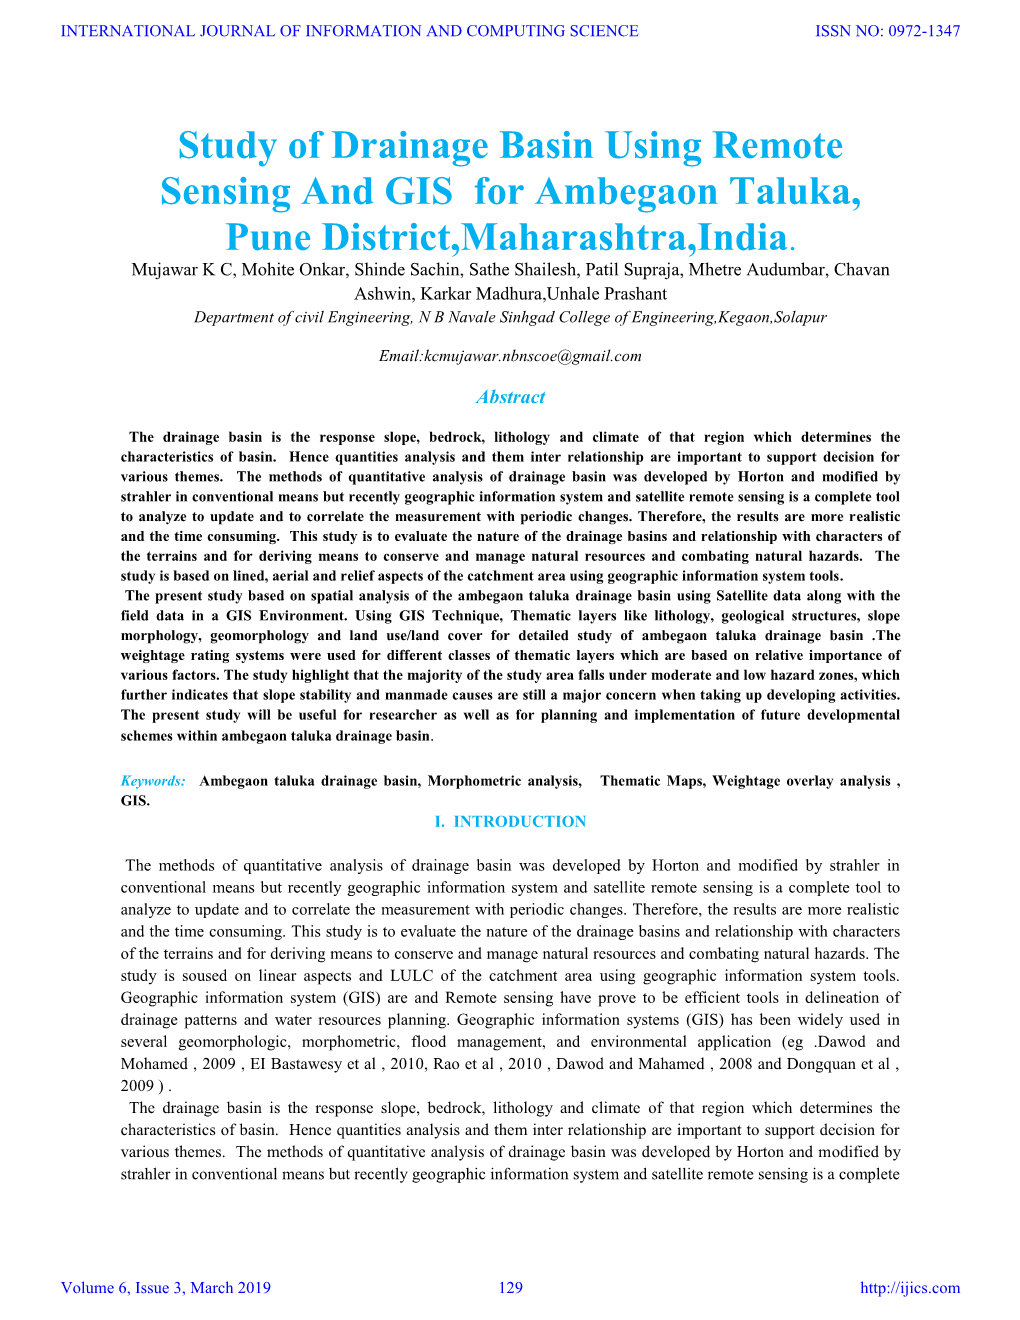 Study of Drainage Basin Using Remote Sensing and GIS for Ambegaon Taluka, Pune District,Maharashtra,India